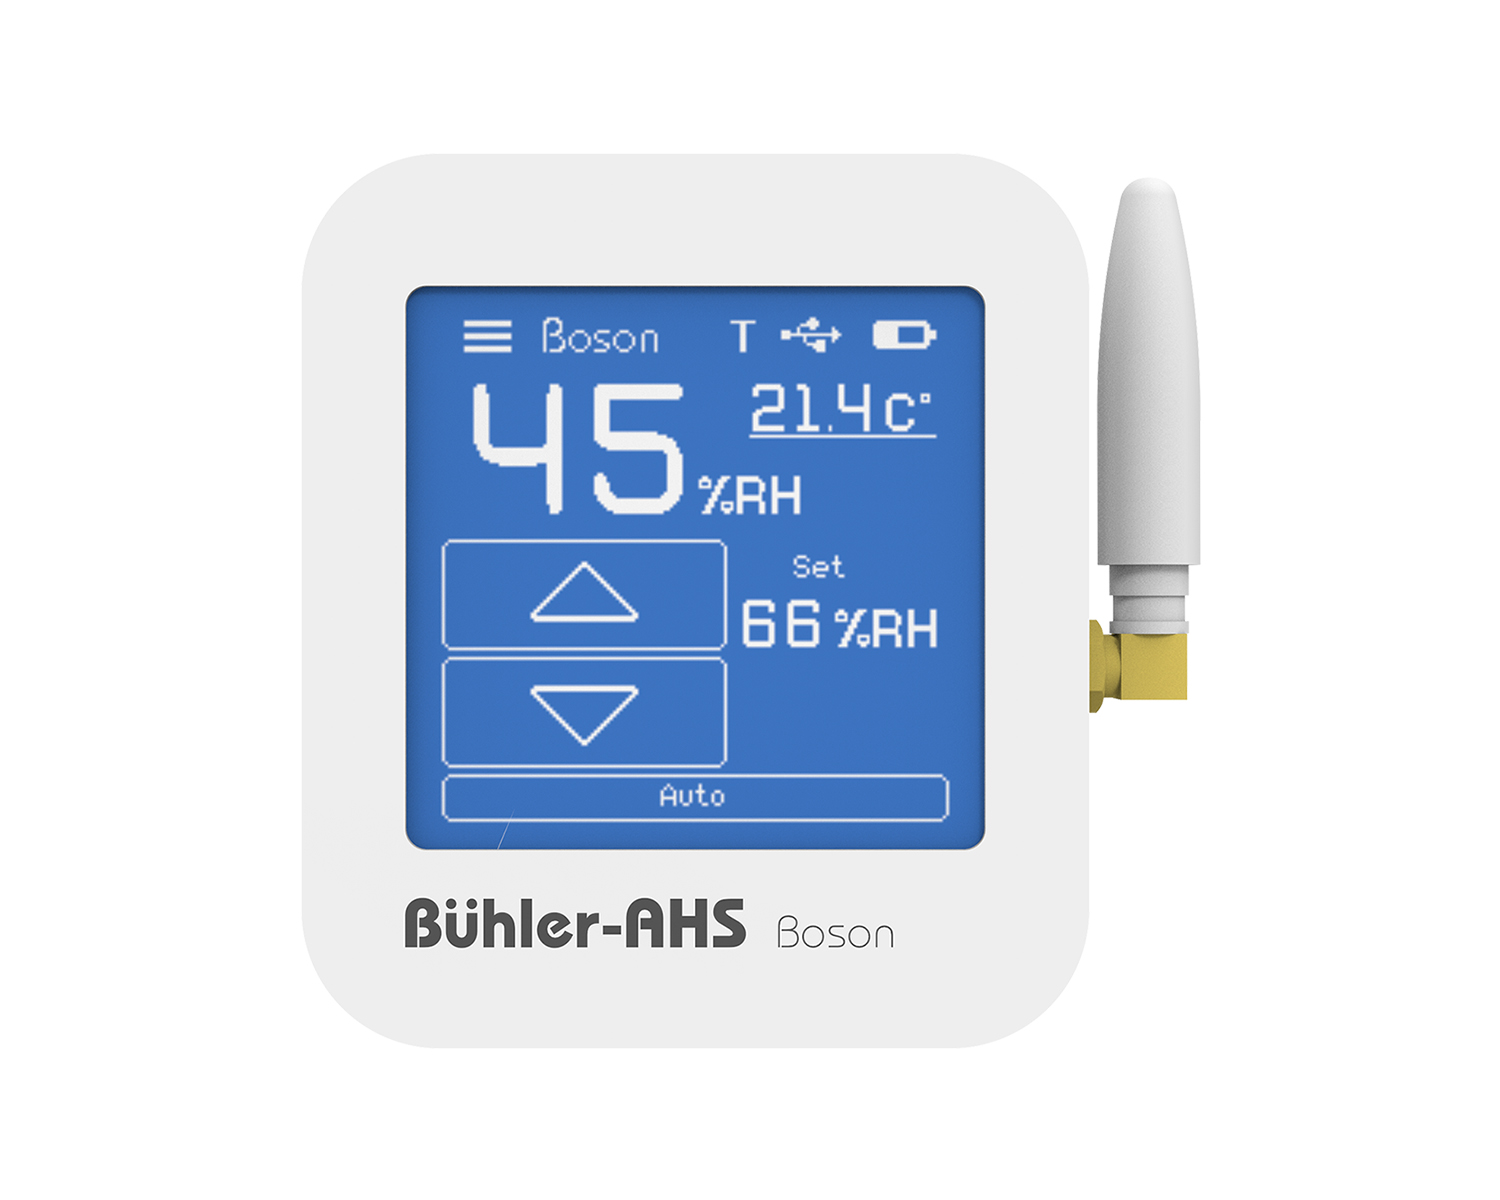 Buhler-AHS Main zone control unit Boson